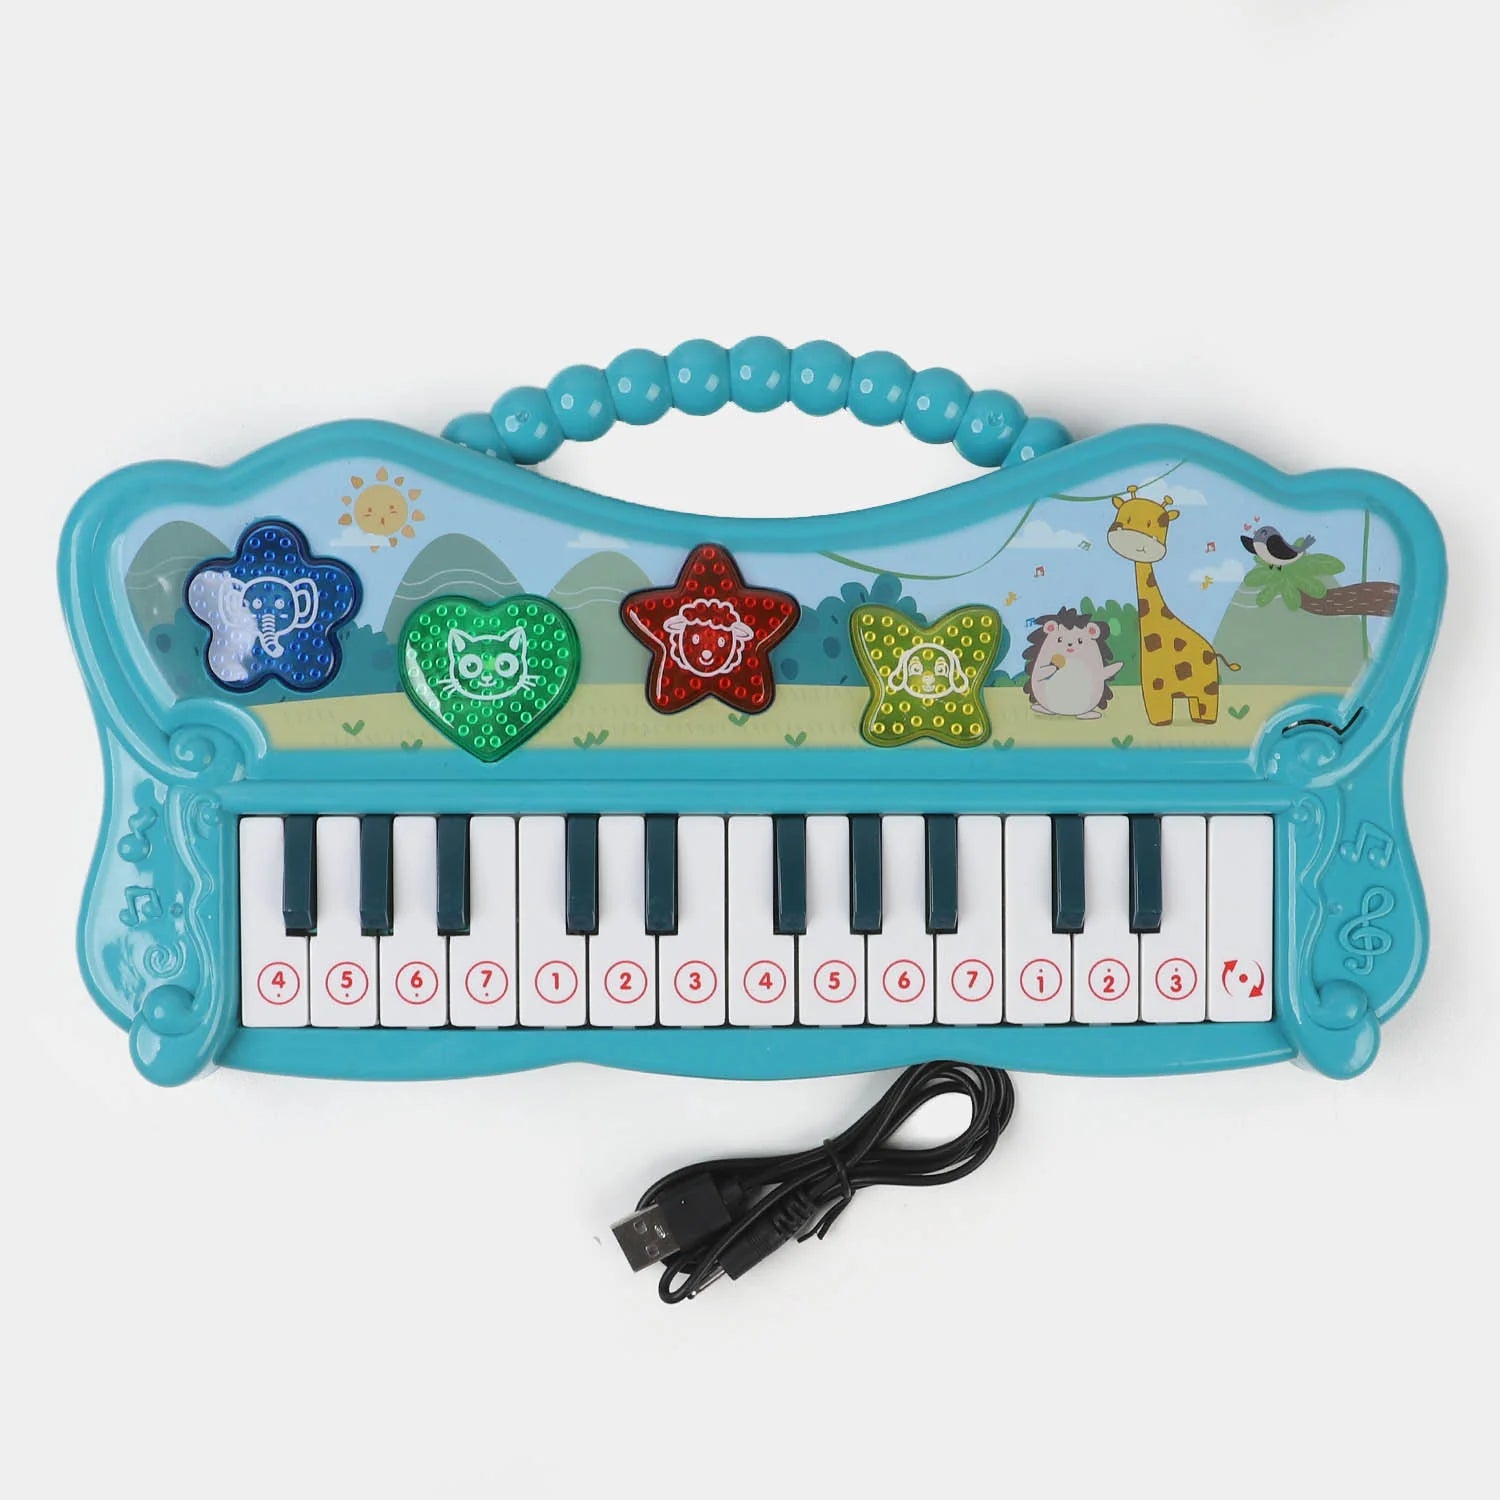 WHACK-A-MOLE KEYBOARD/PIANO FOR KIDS - Blue